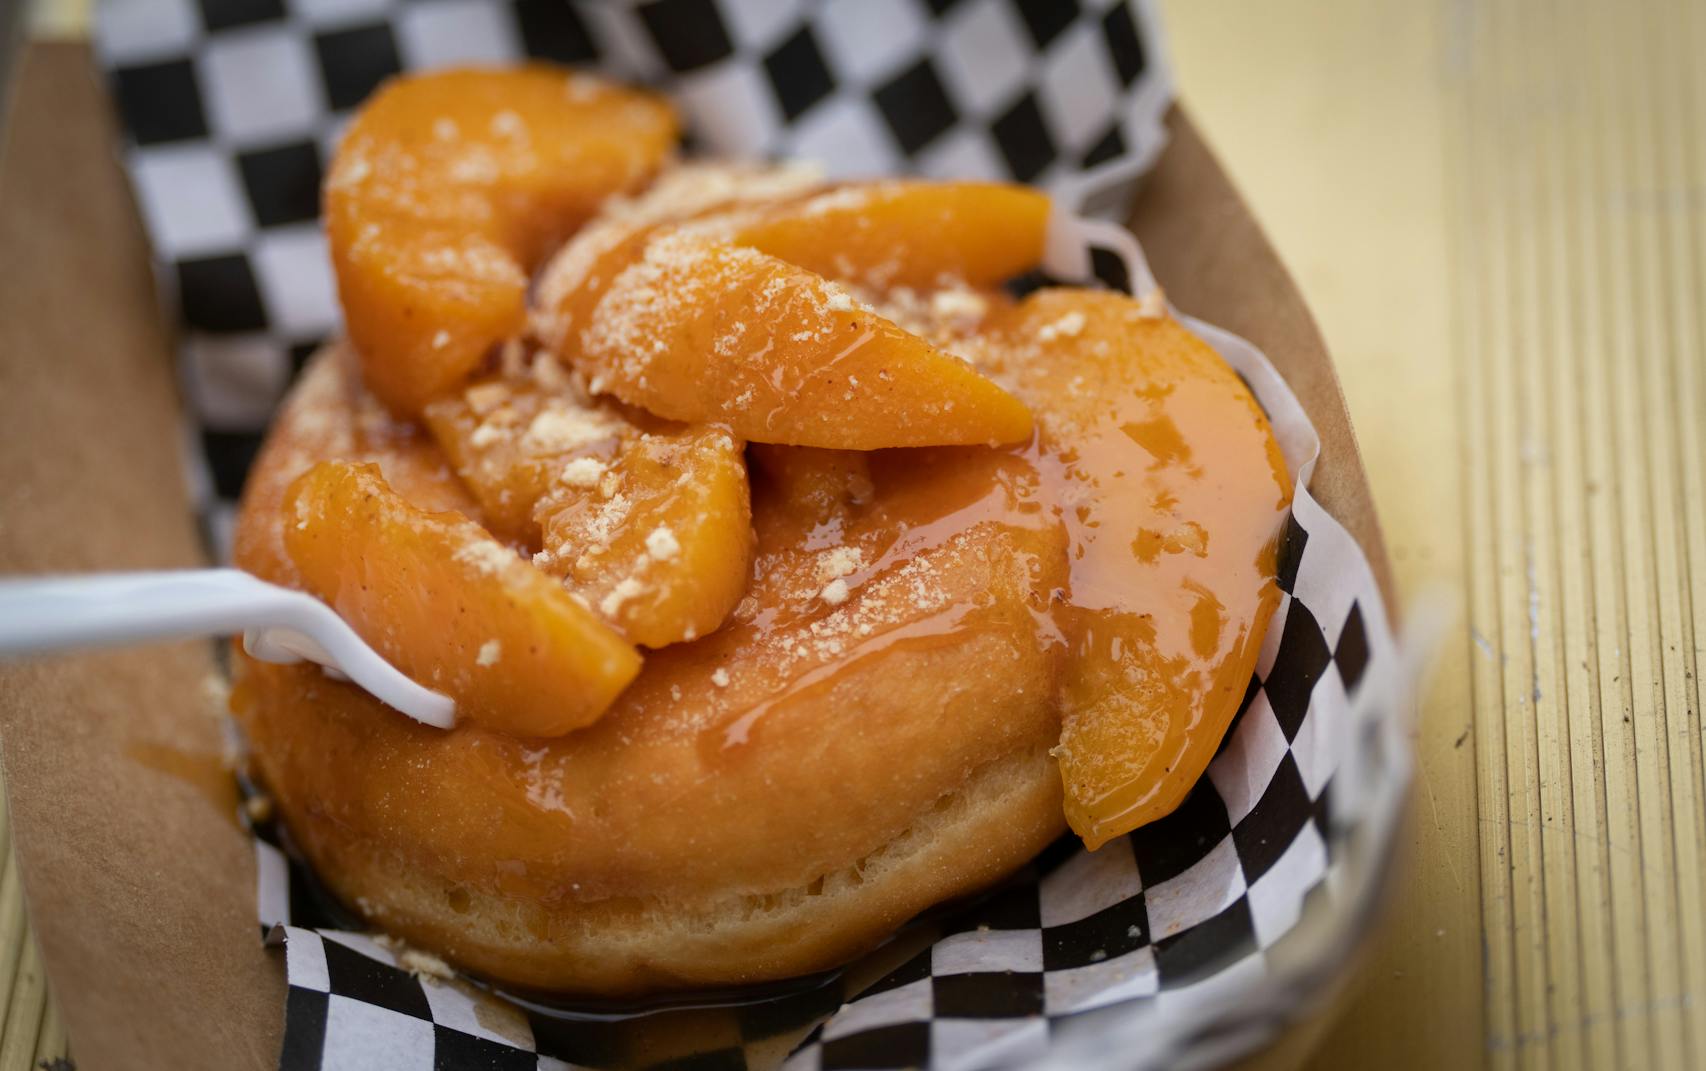 Donut Peach Cobbler from Soul Bowl. New foods at the Minnesota State Fair photographed on Thursday, Aug. 25, 2022 in Falcon Heights, Minn. ] RENEE JONES SCHNEIDER • renee.jones@startribune.com